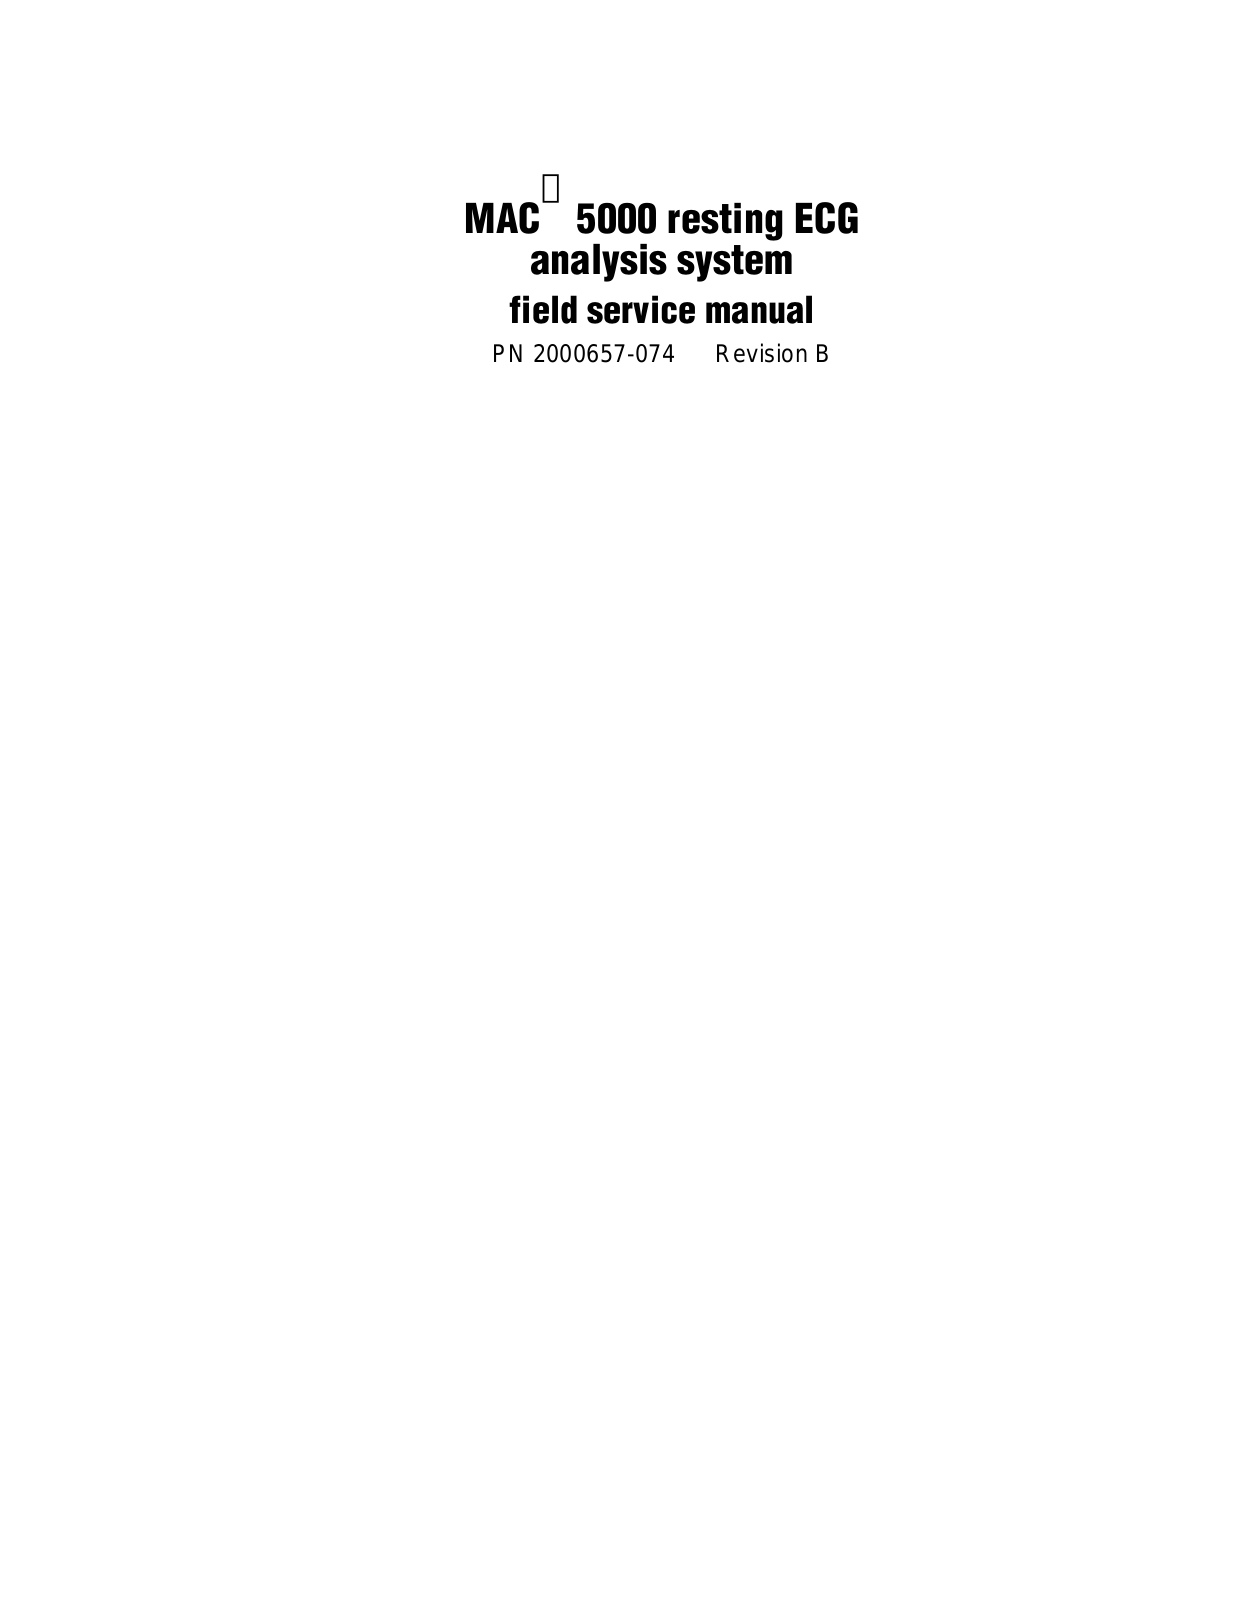 GE MAC 5000 Service manual